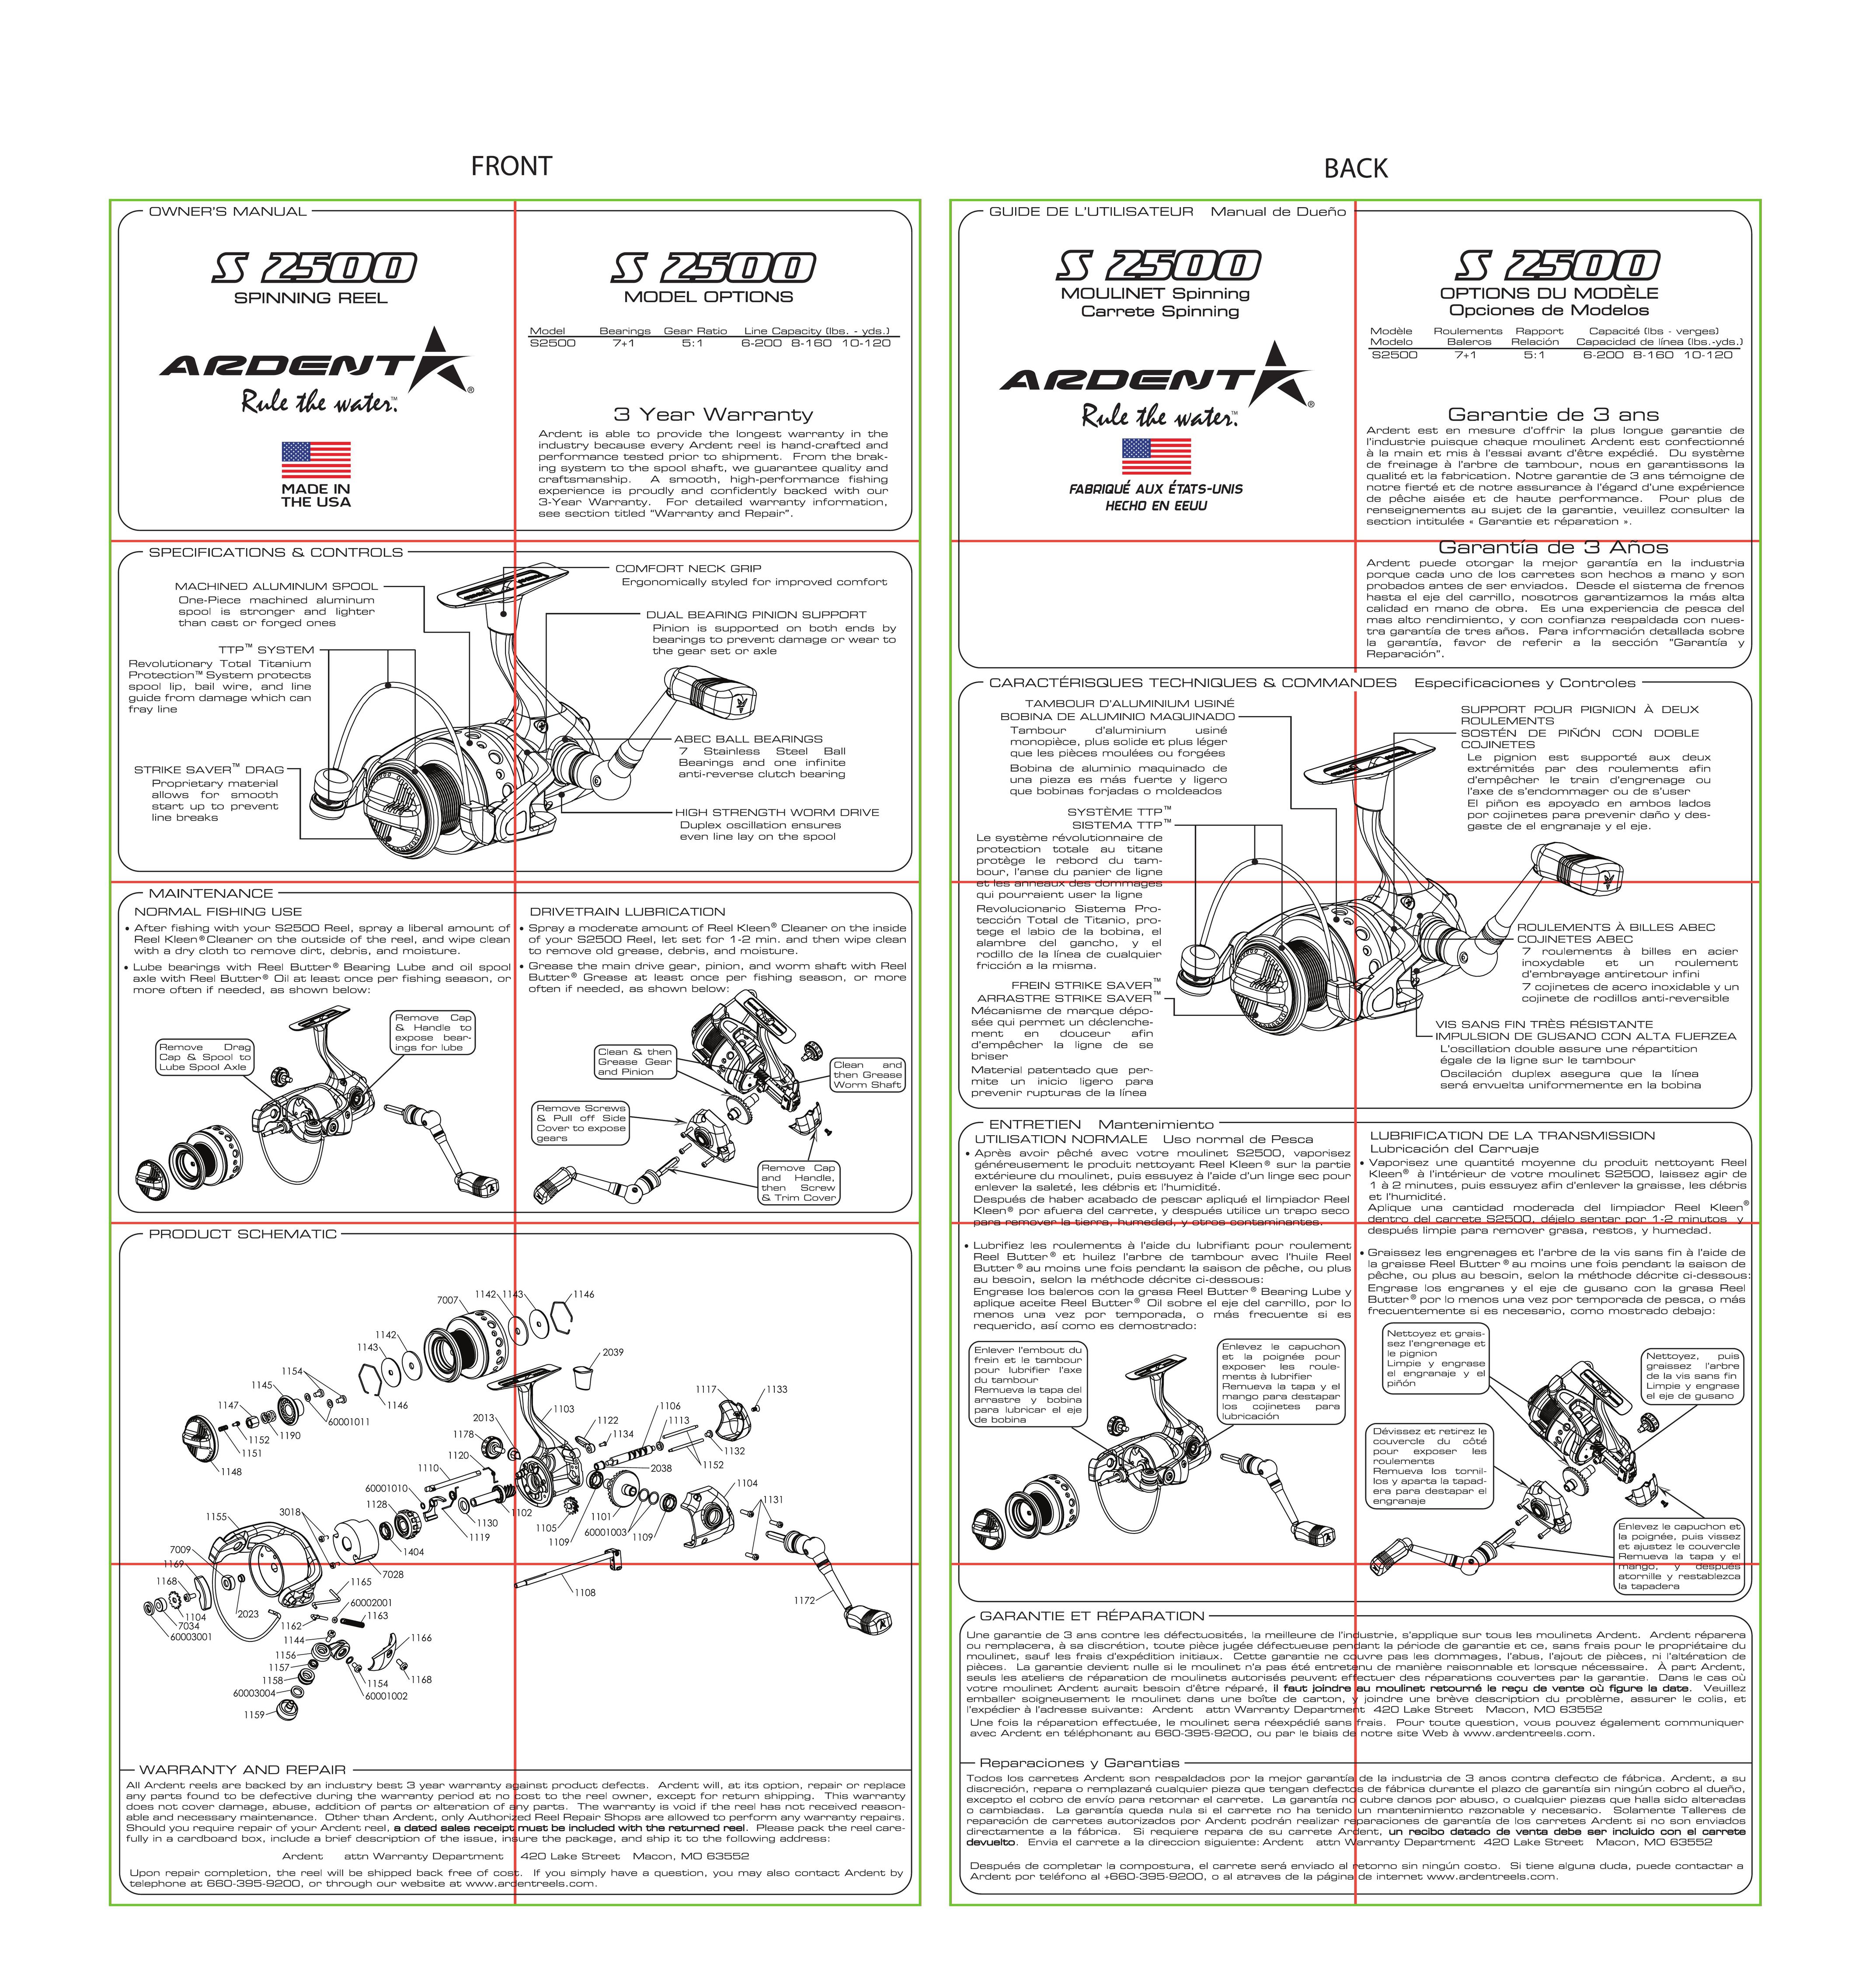 Ardent S 2500 Fishing Equipment User Manual